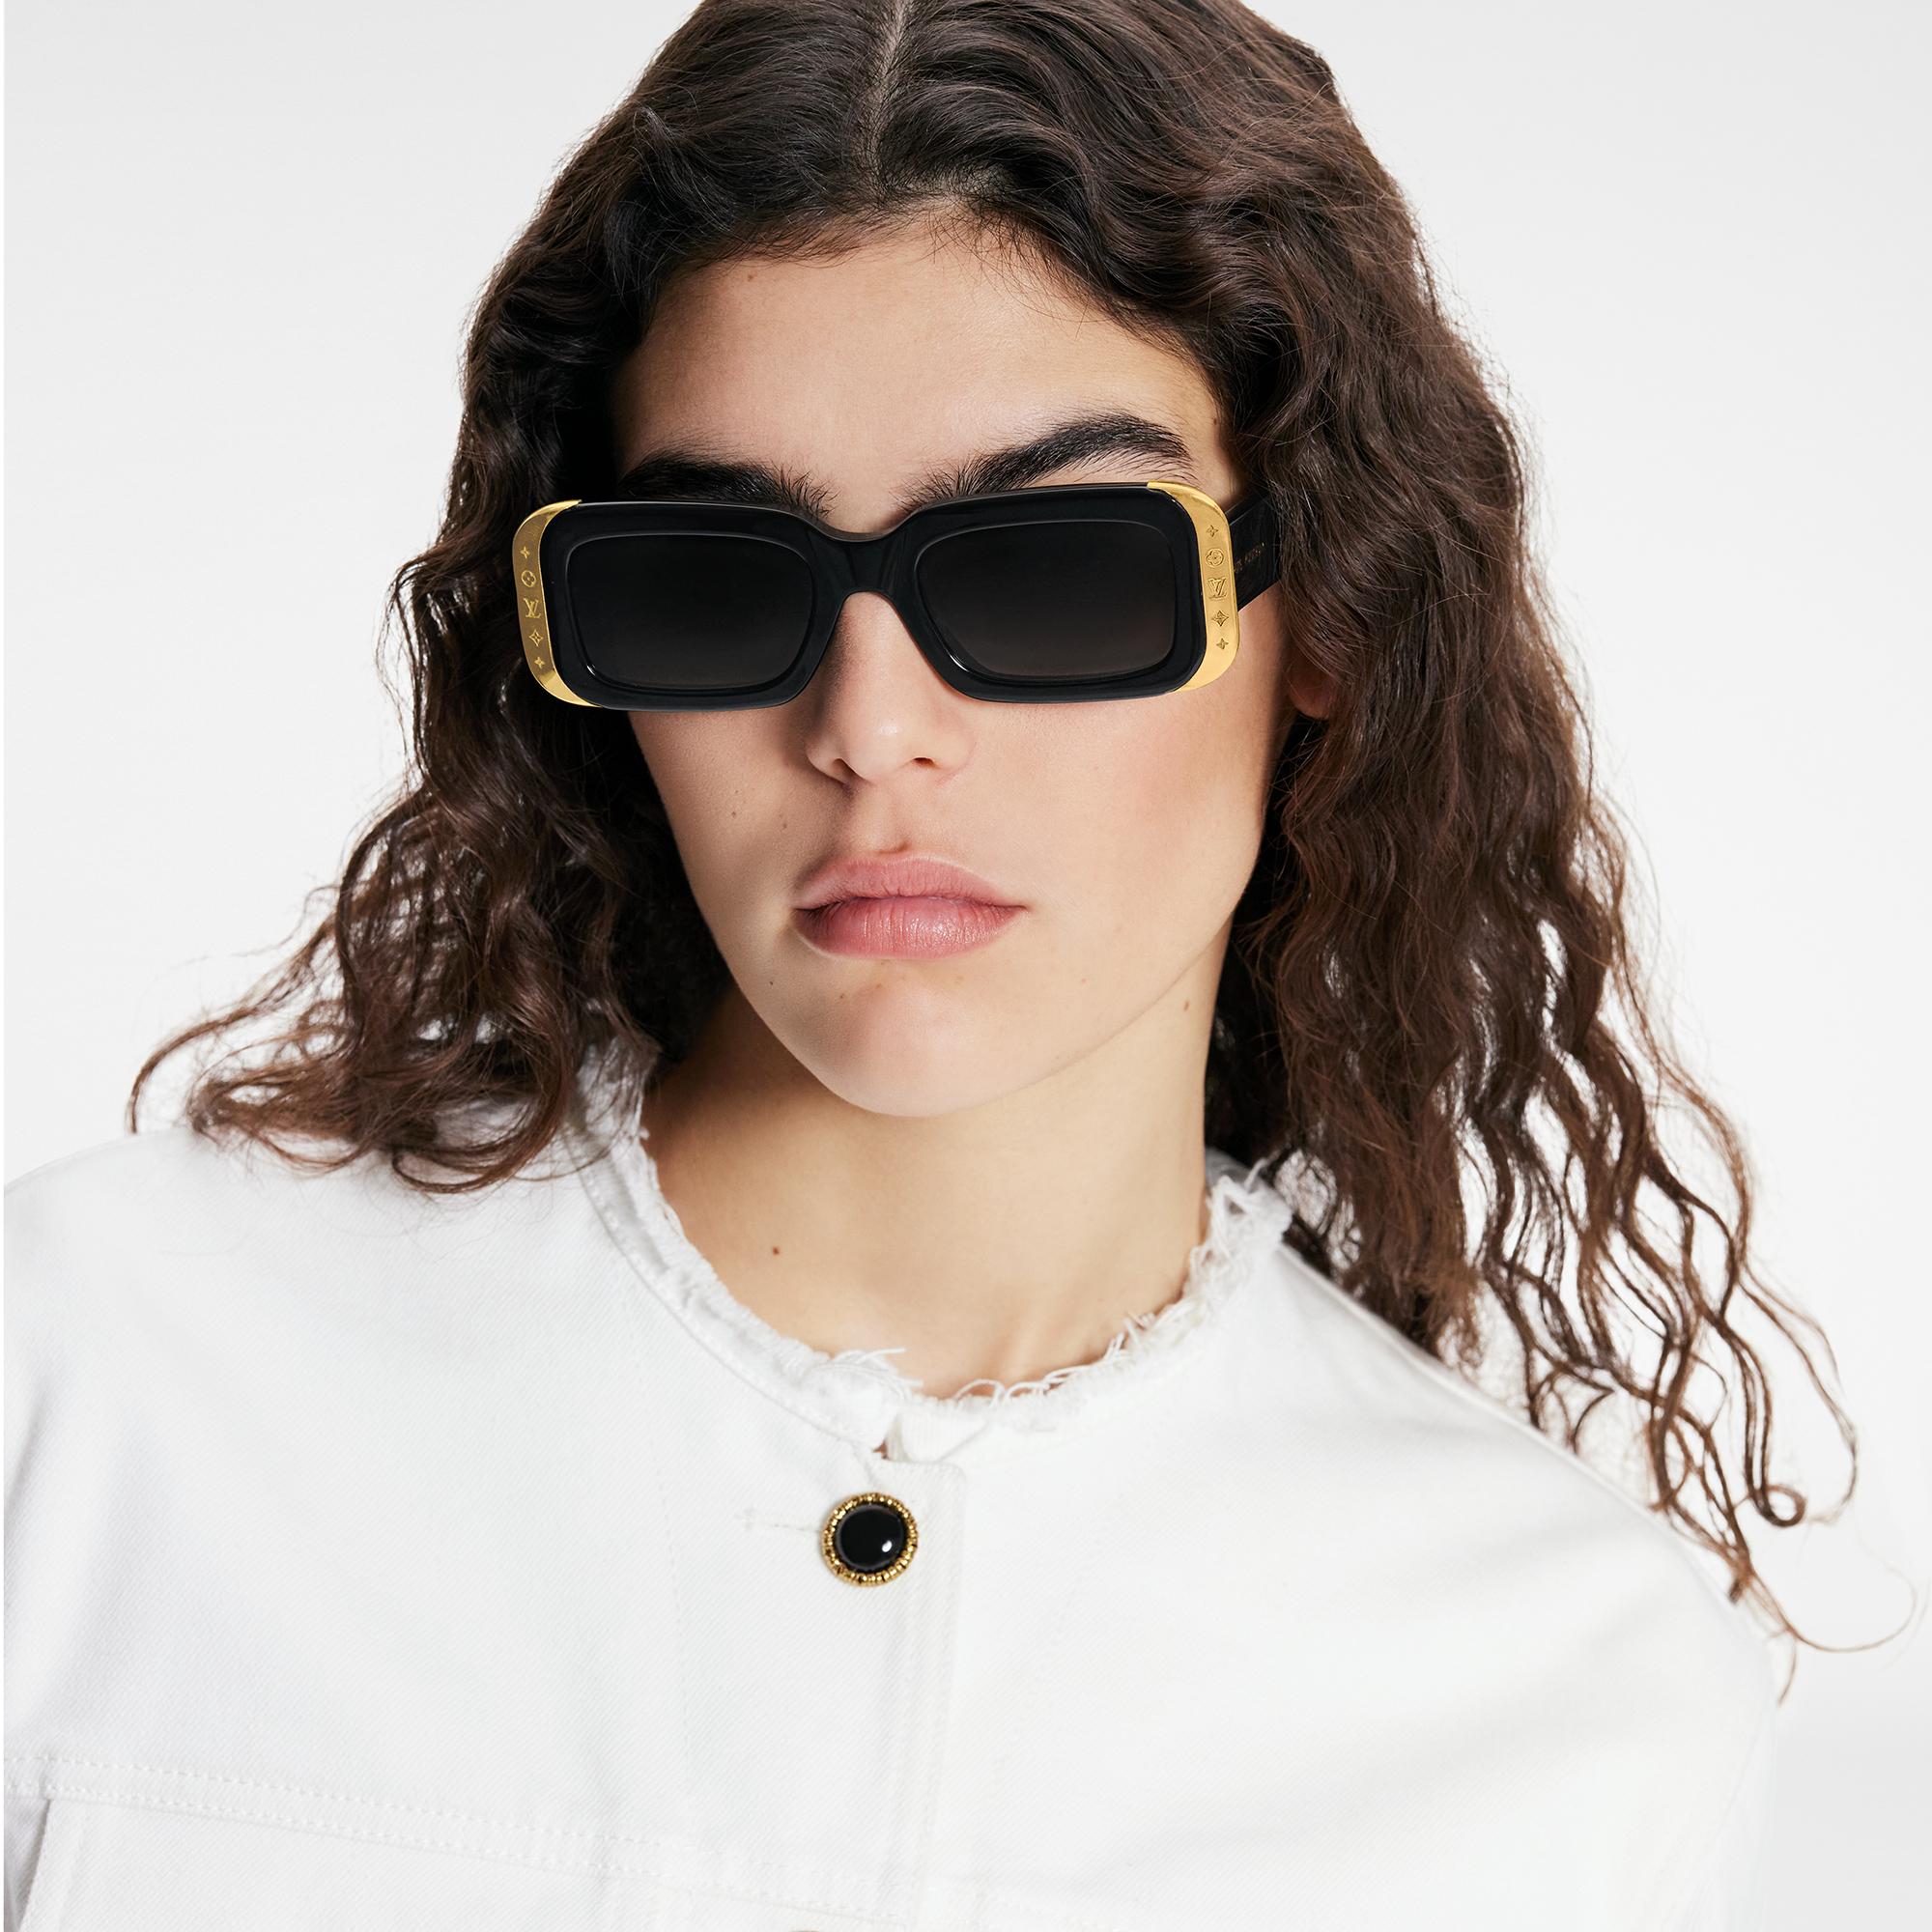 Grease Mask Sunglasses S00 - Accessories Z1469U